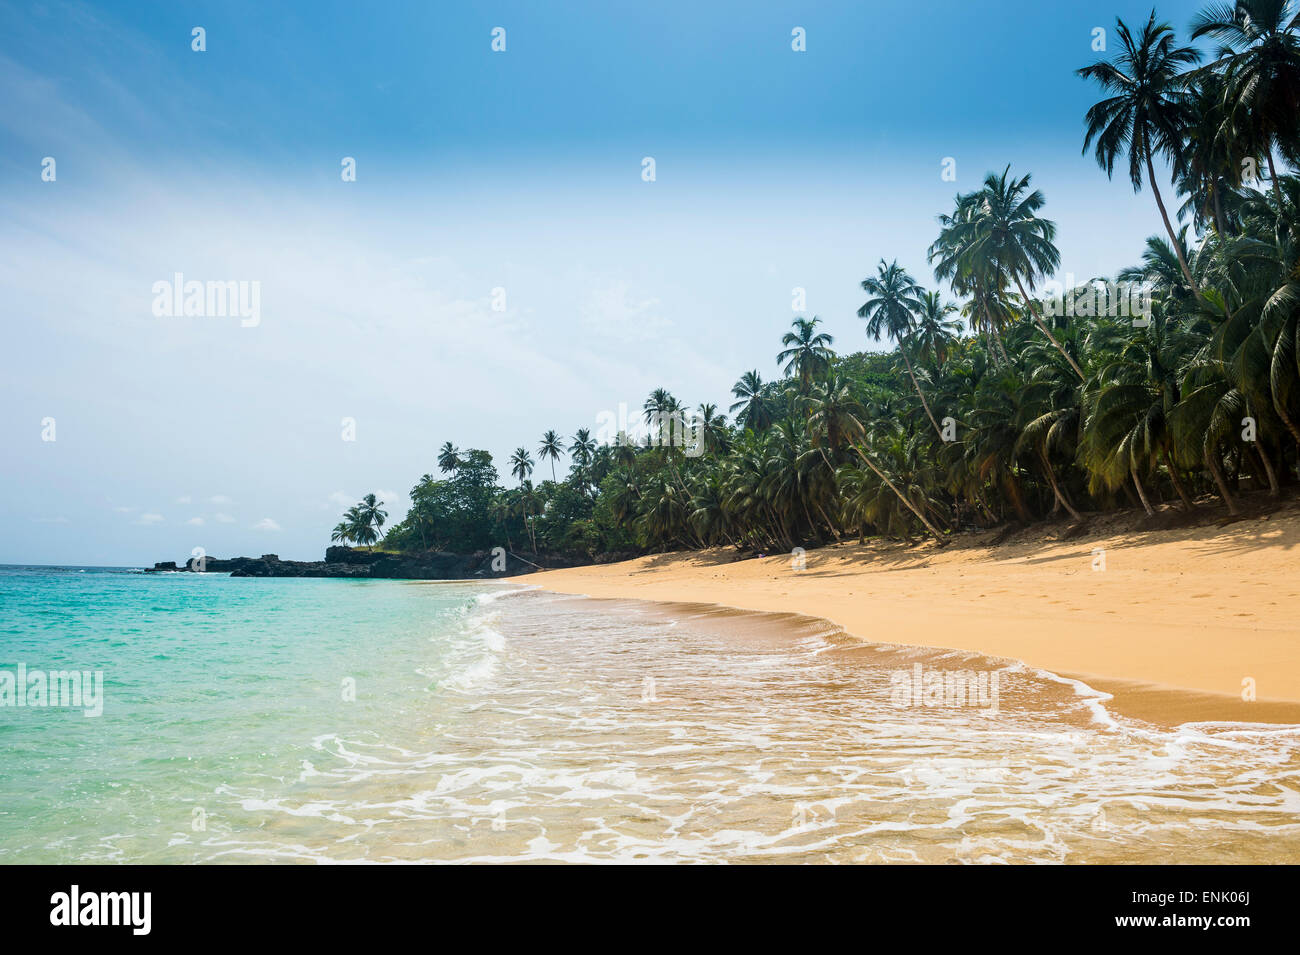 Remote tropical beach on the UNESCO Biosphere Reserve, Principe, Sao Tome and Principe, Atlantic Ocean, Africa Stock Photo